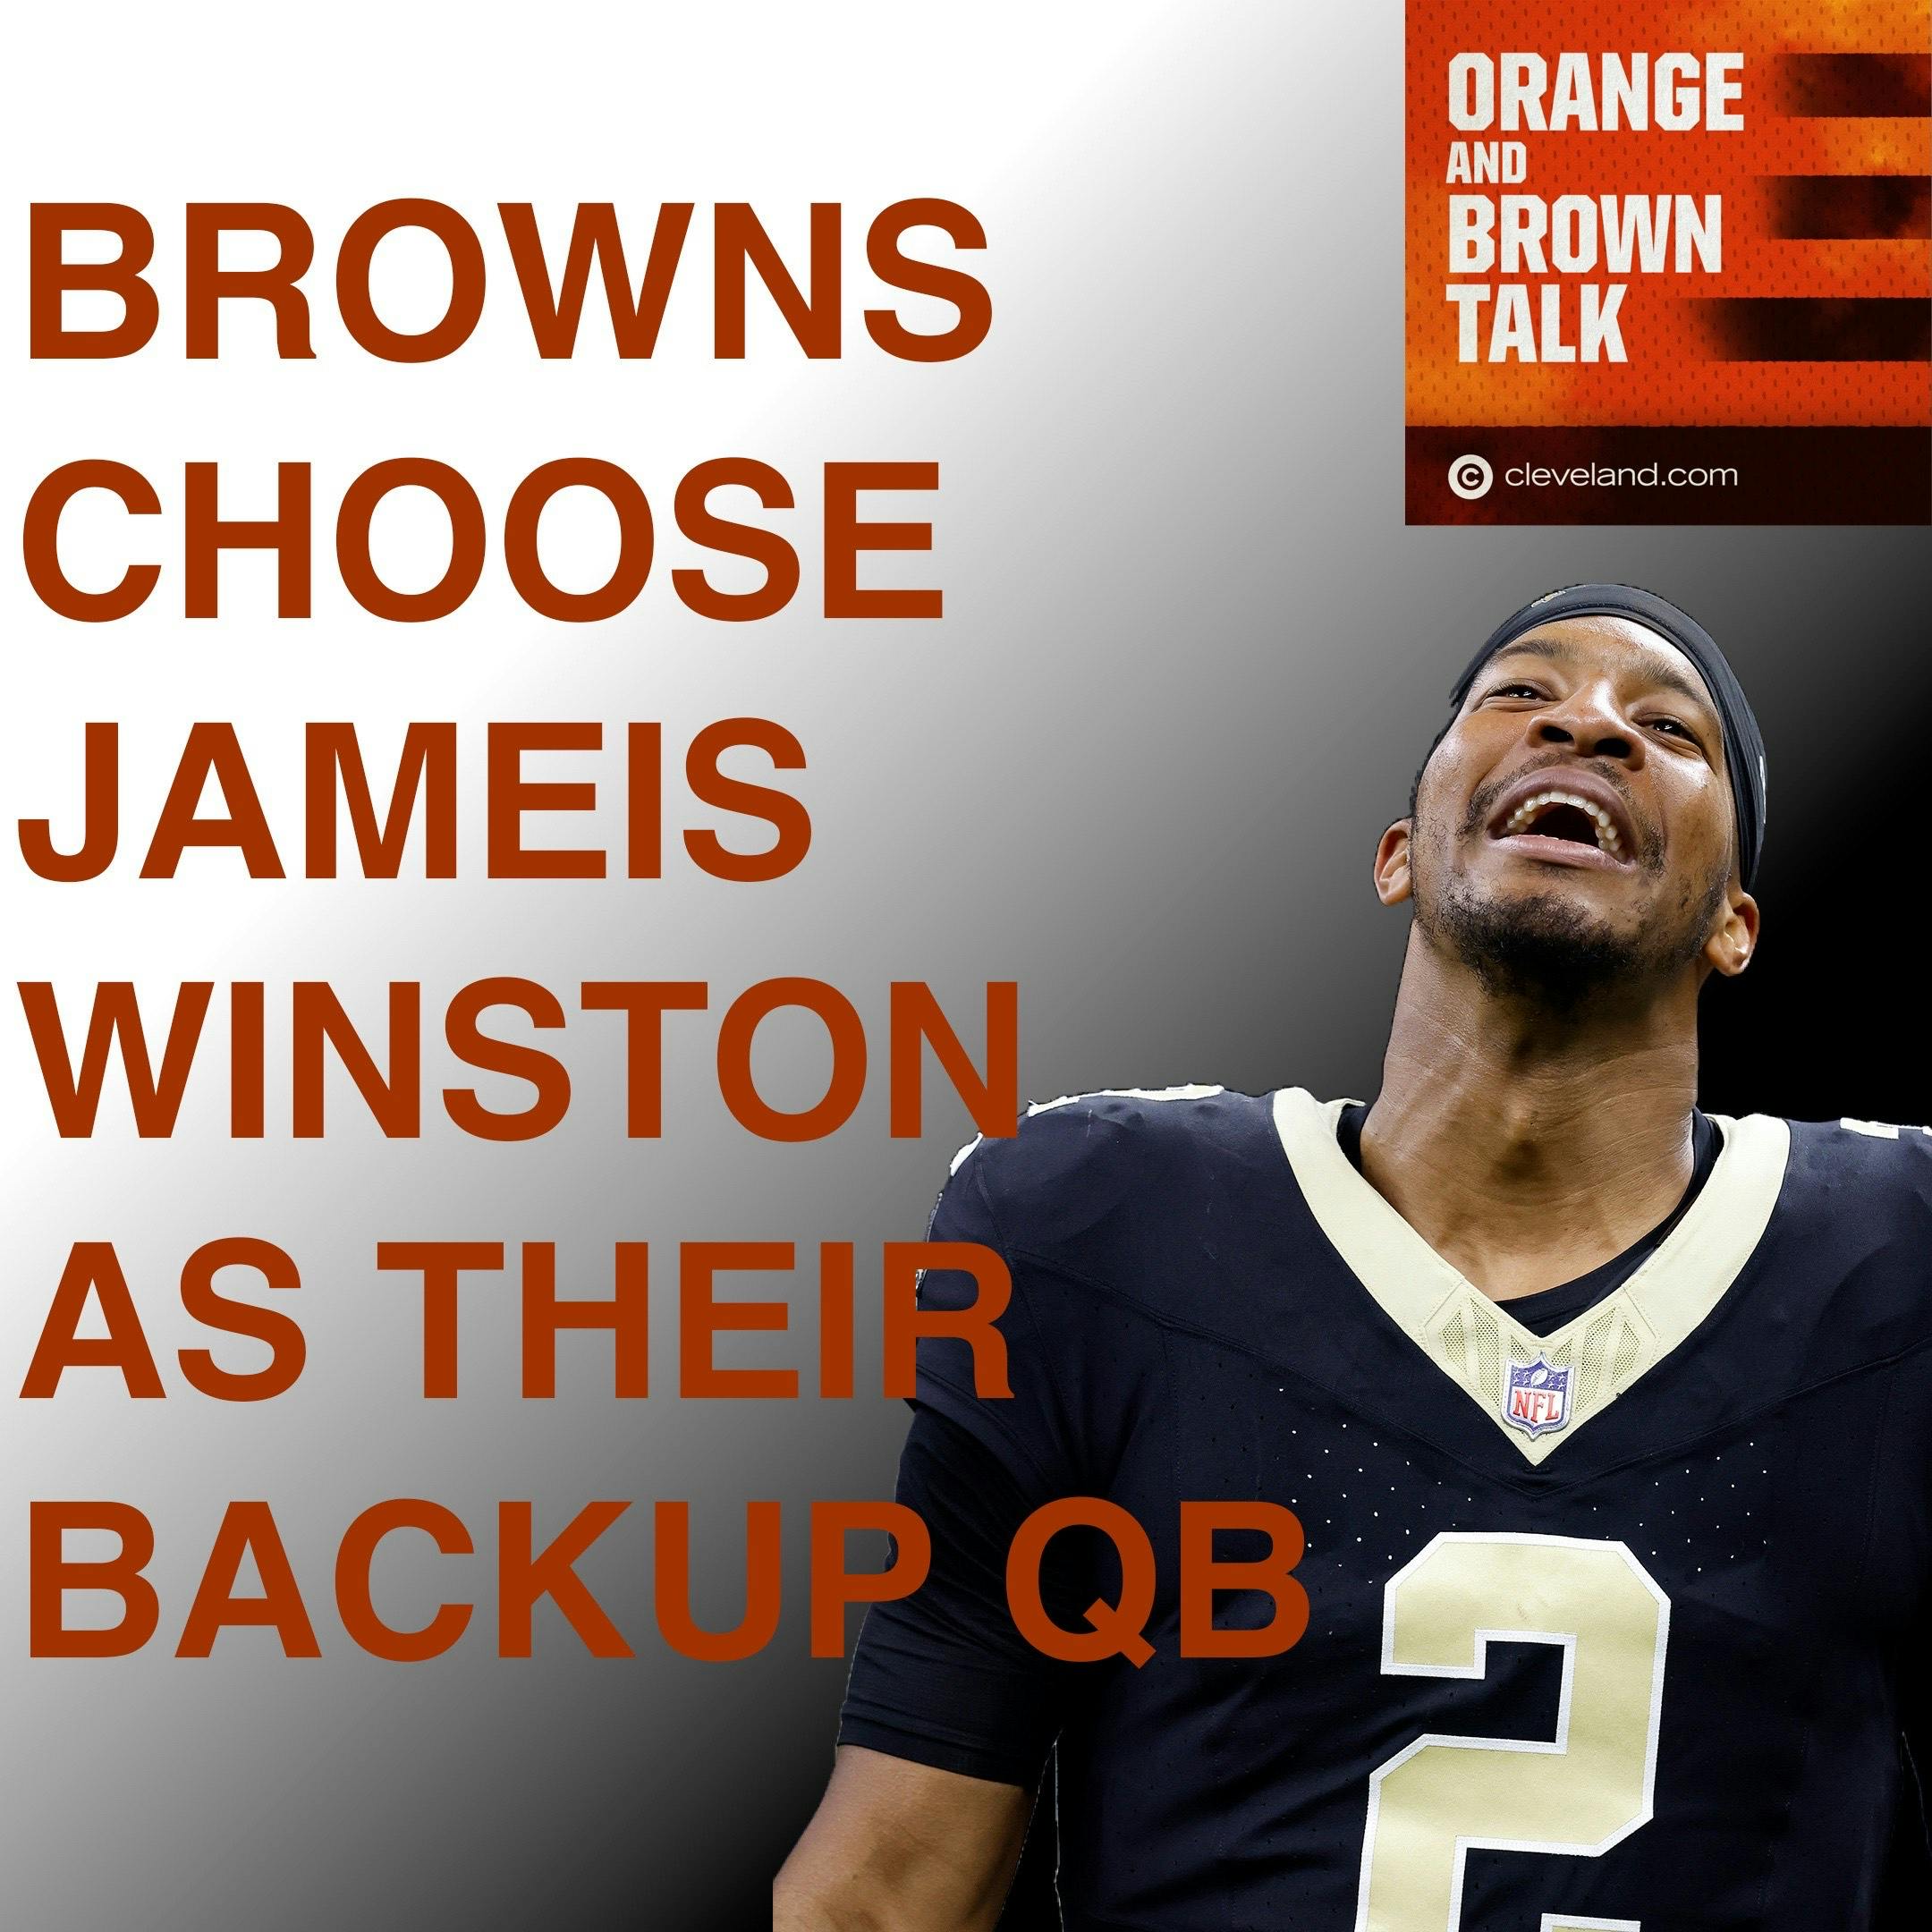 Why did the Browns choose Jameis Winston over Joe Flacco?